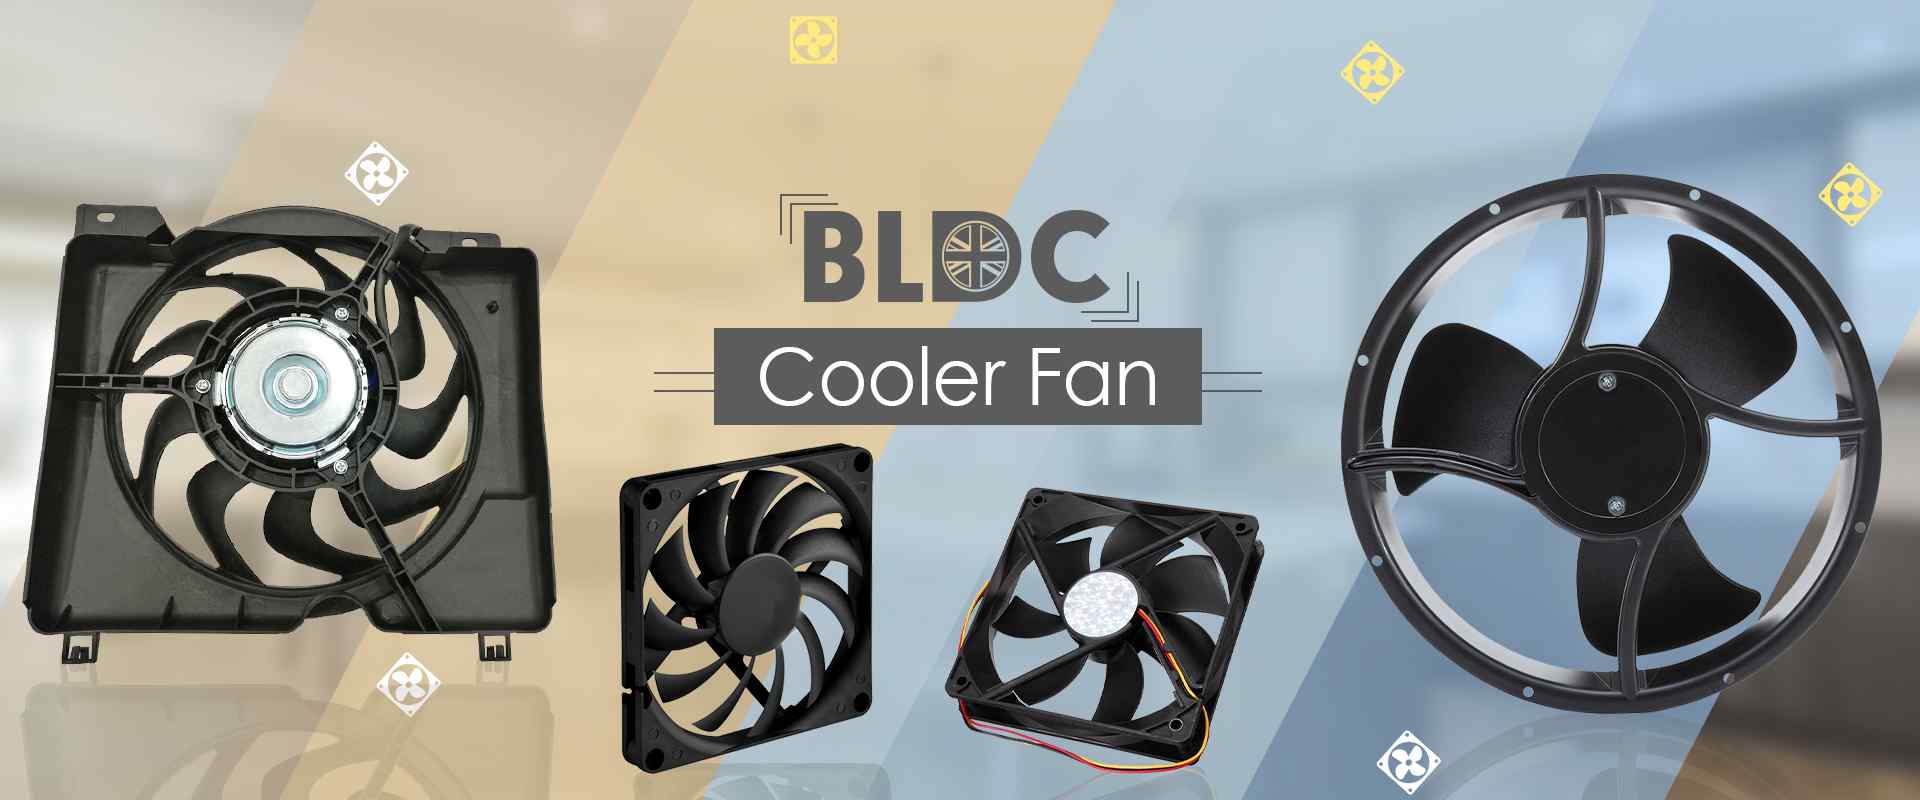 BLDC Cooler Fan